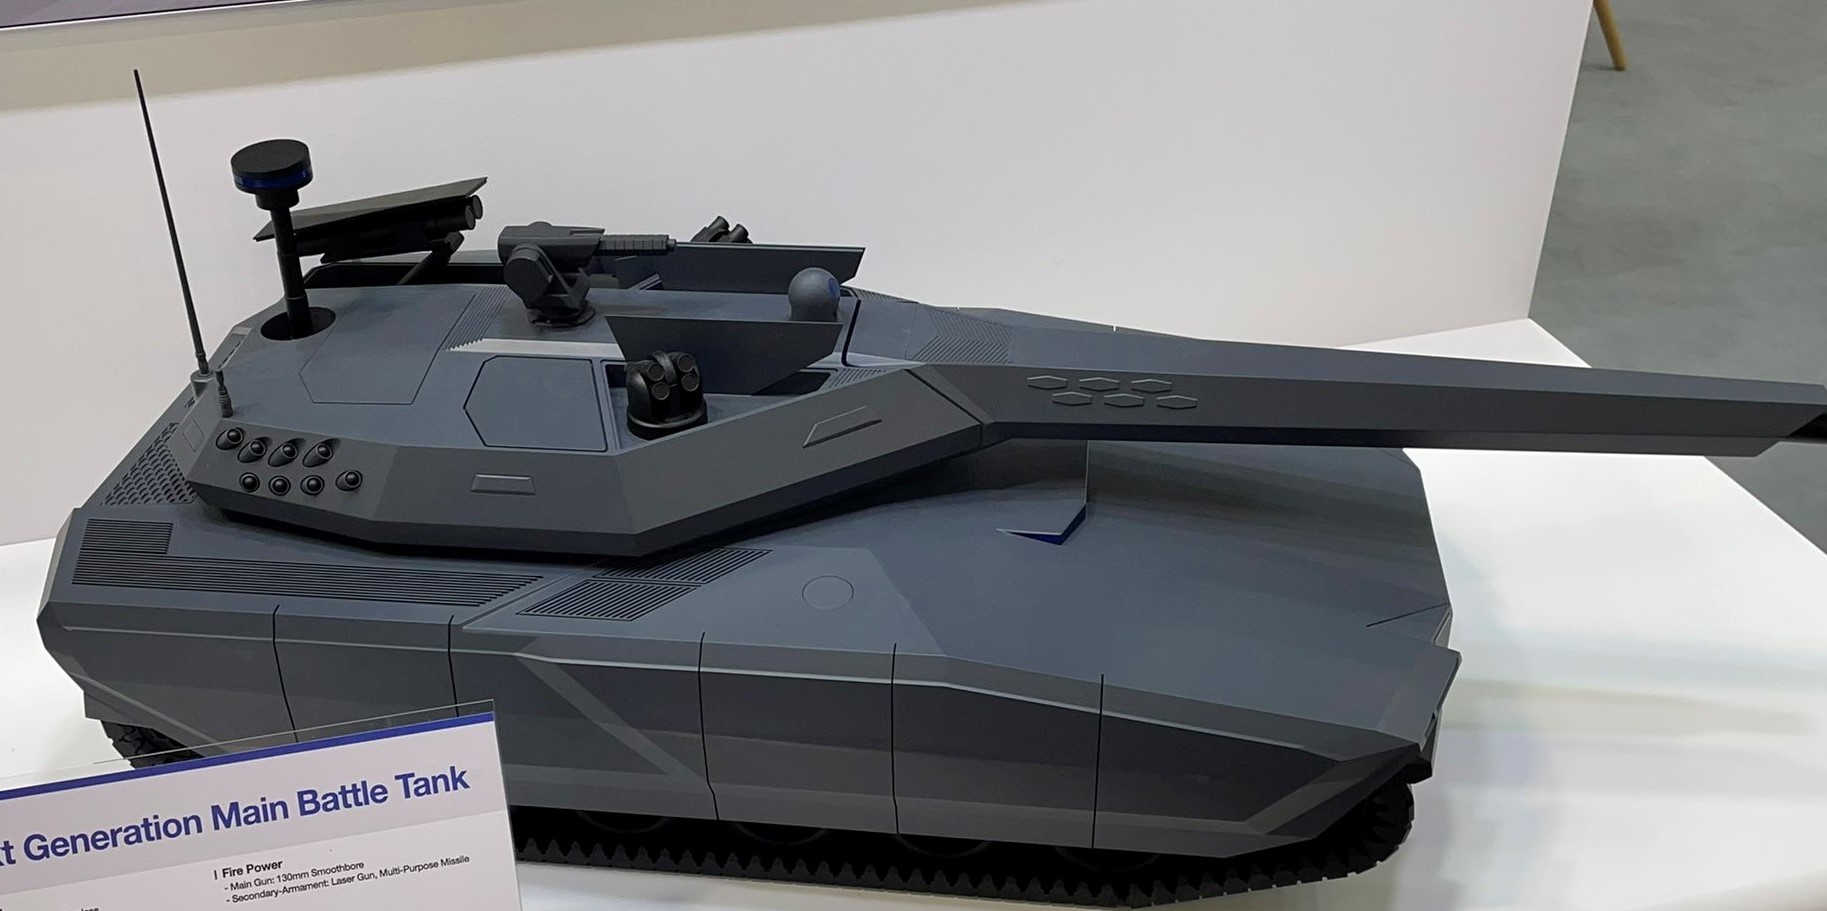 Hyundai Rotem unveiled a 'New Generation Main Battle Tank' concept -  Militarnyi